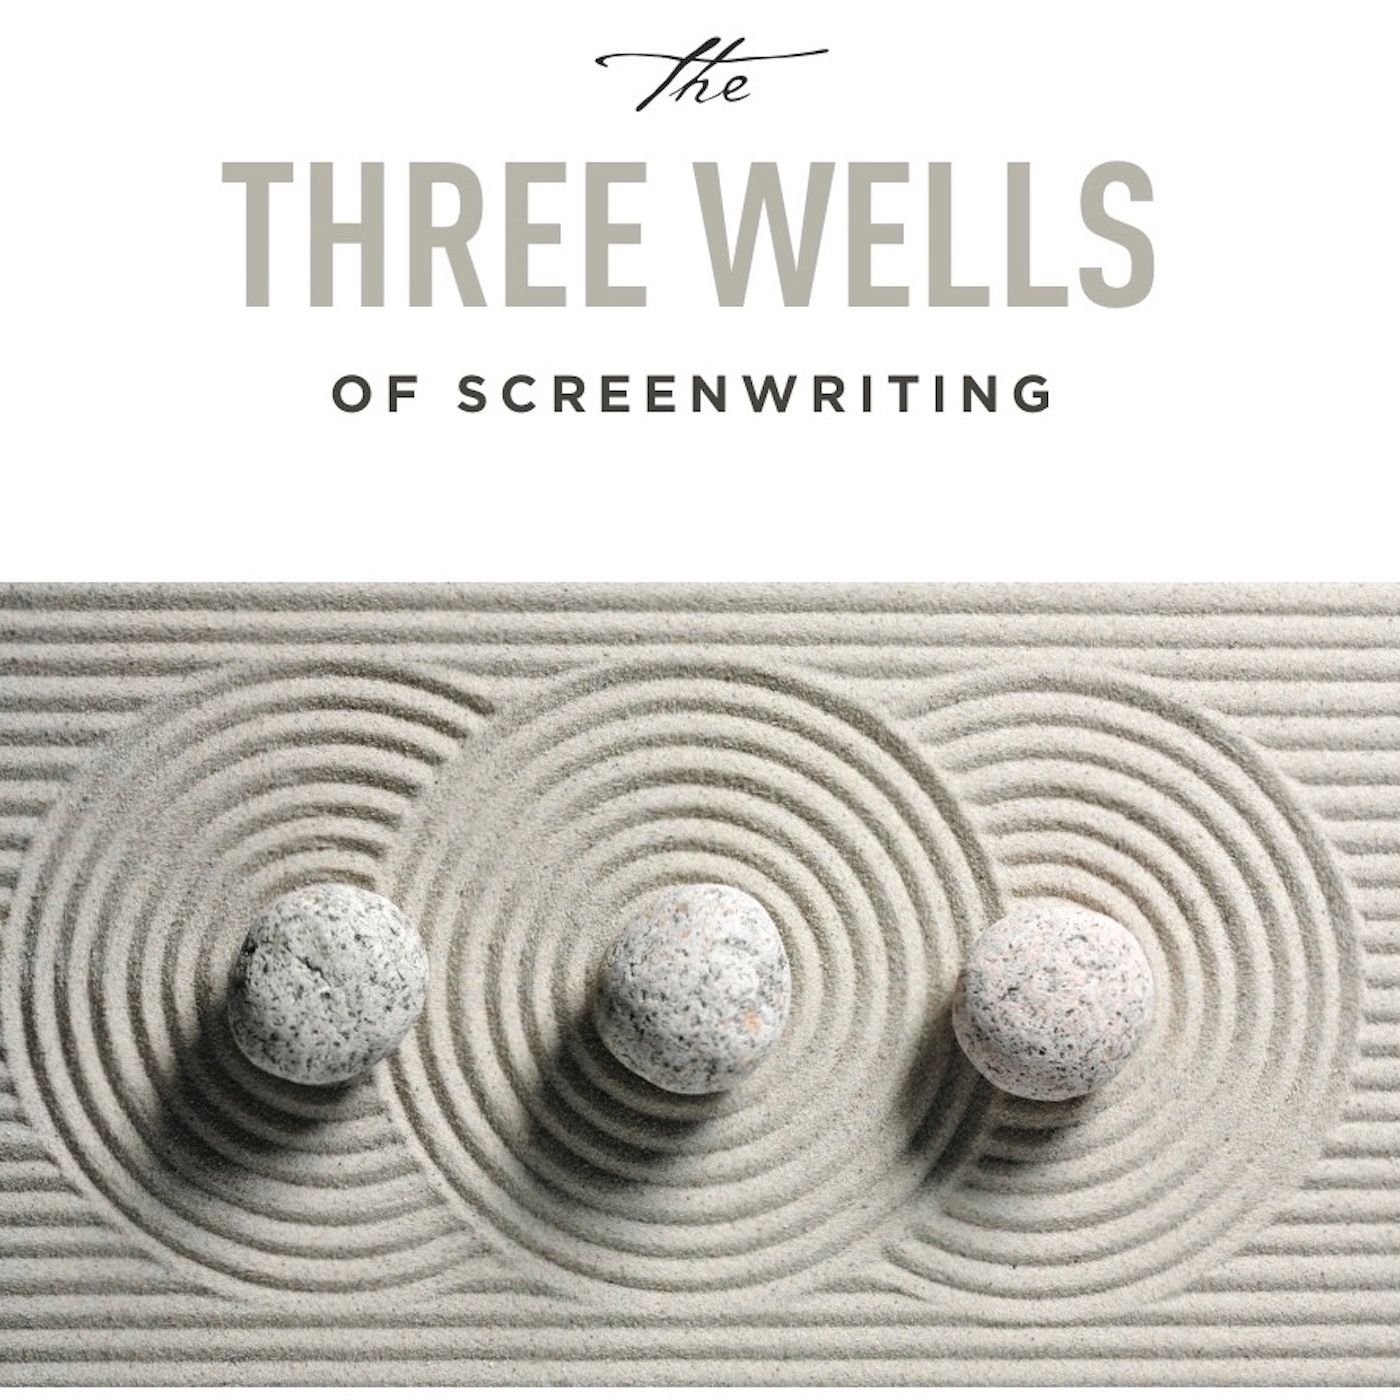 The Three Wells